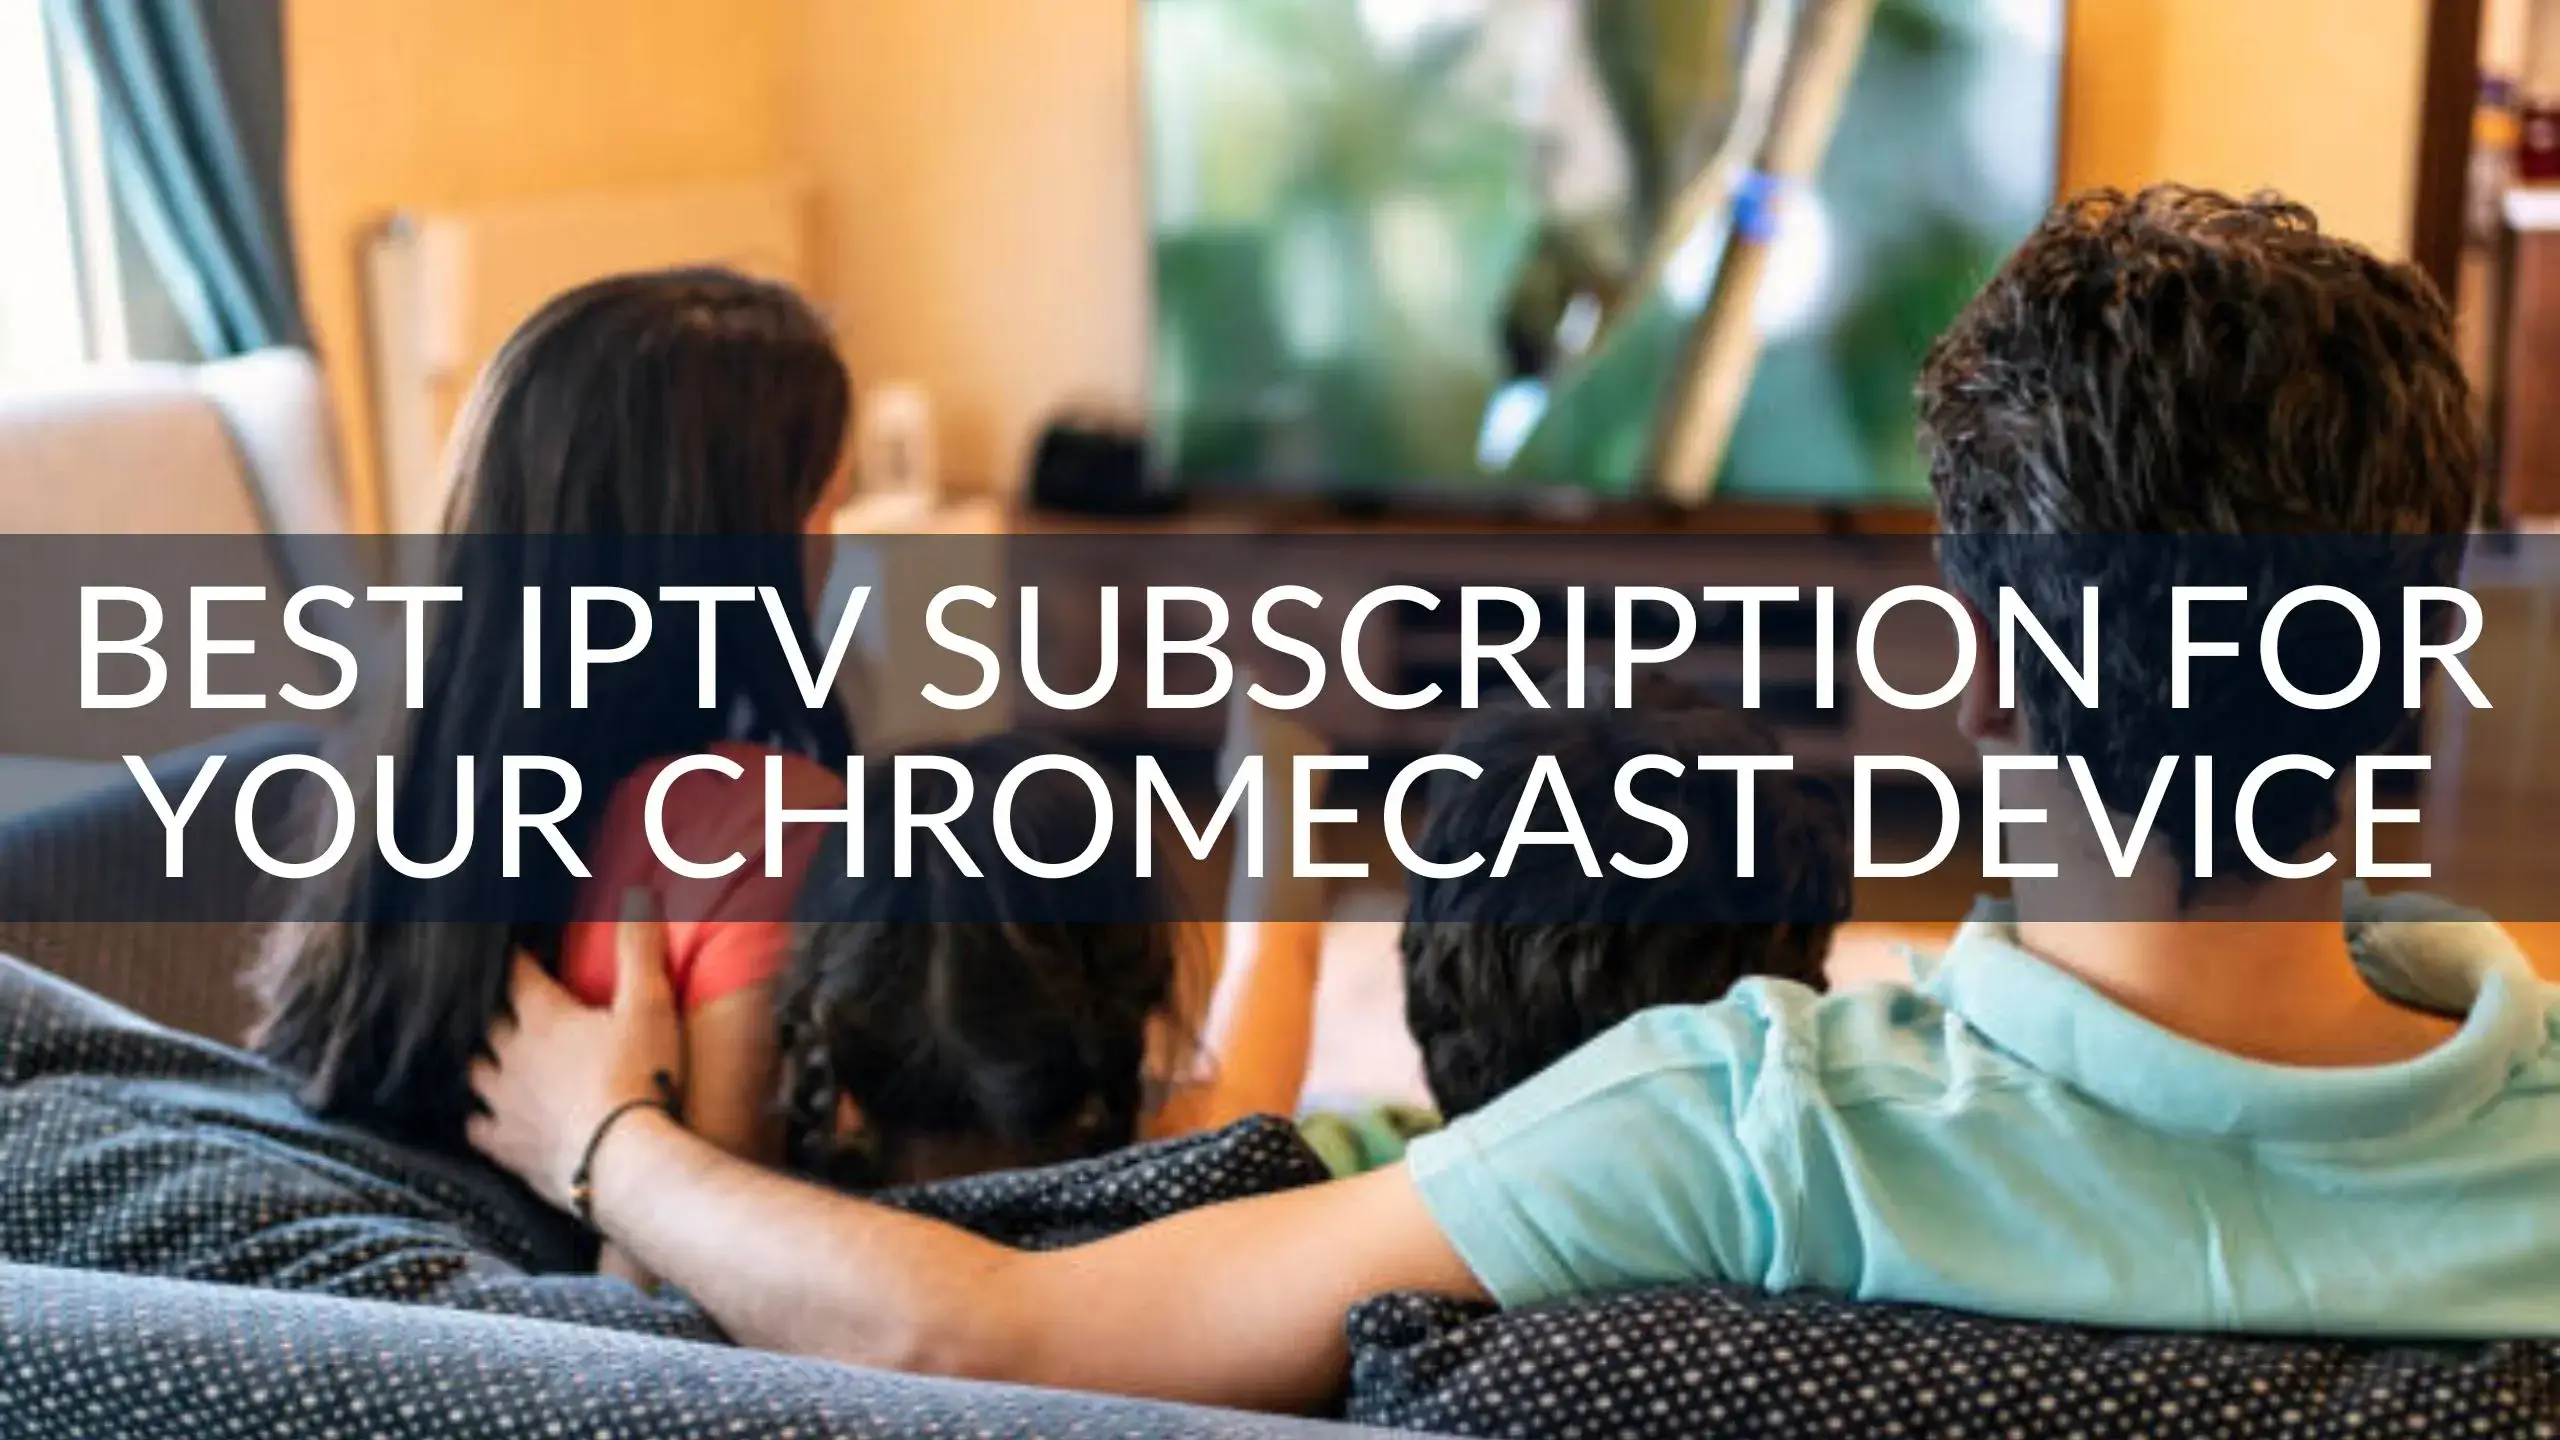 Best IPTV Subscription for Your Chromecast Device